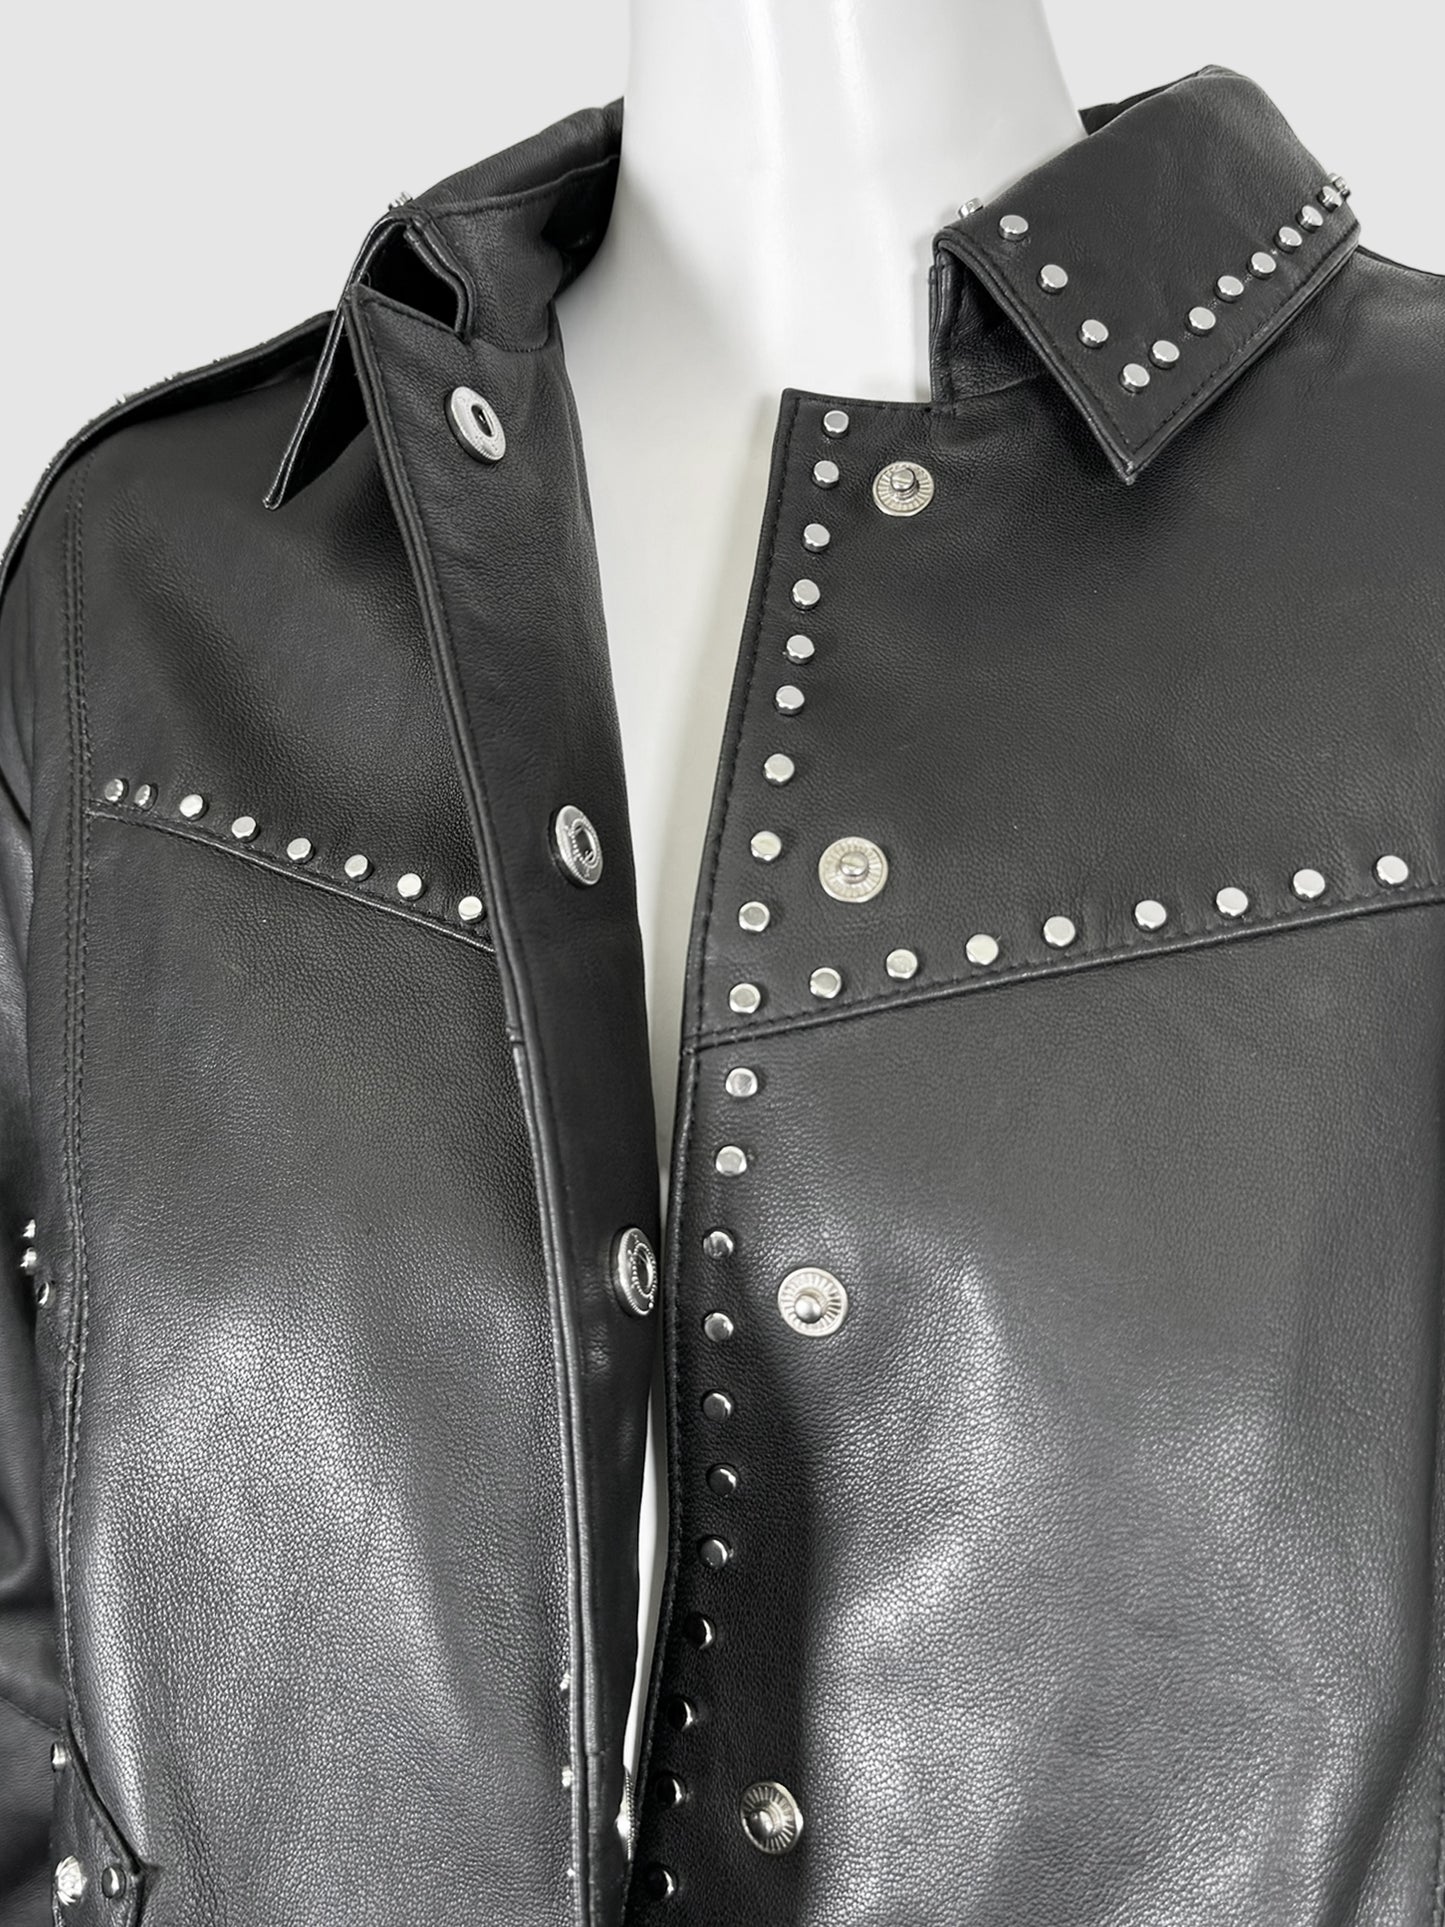 Belvisa Studded Leather Jacket - Size 36